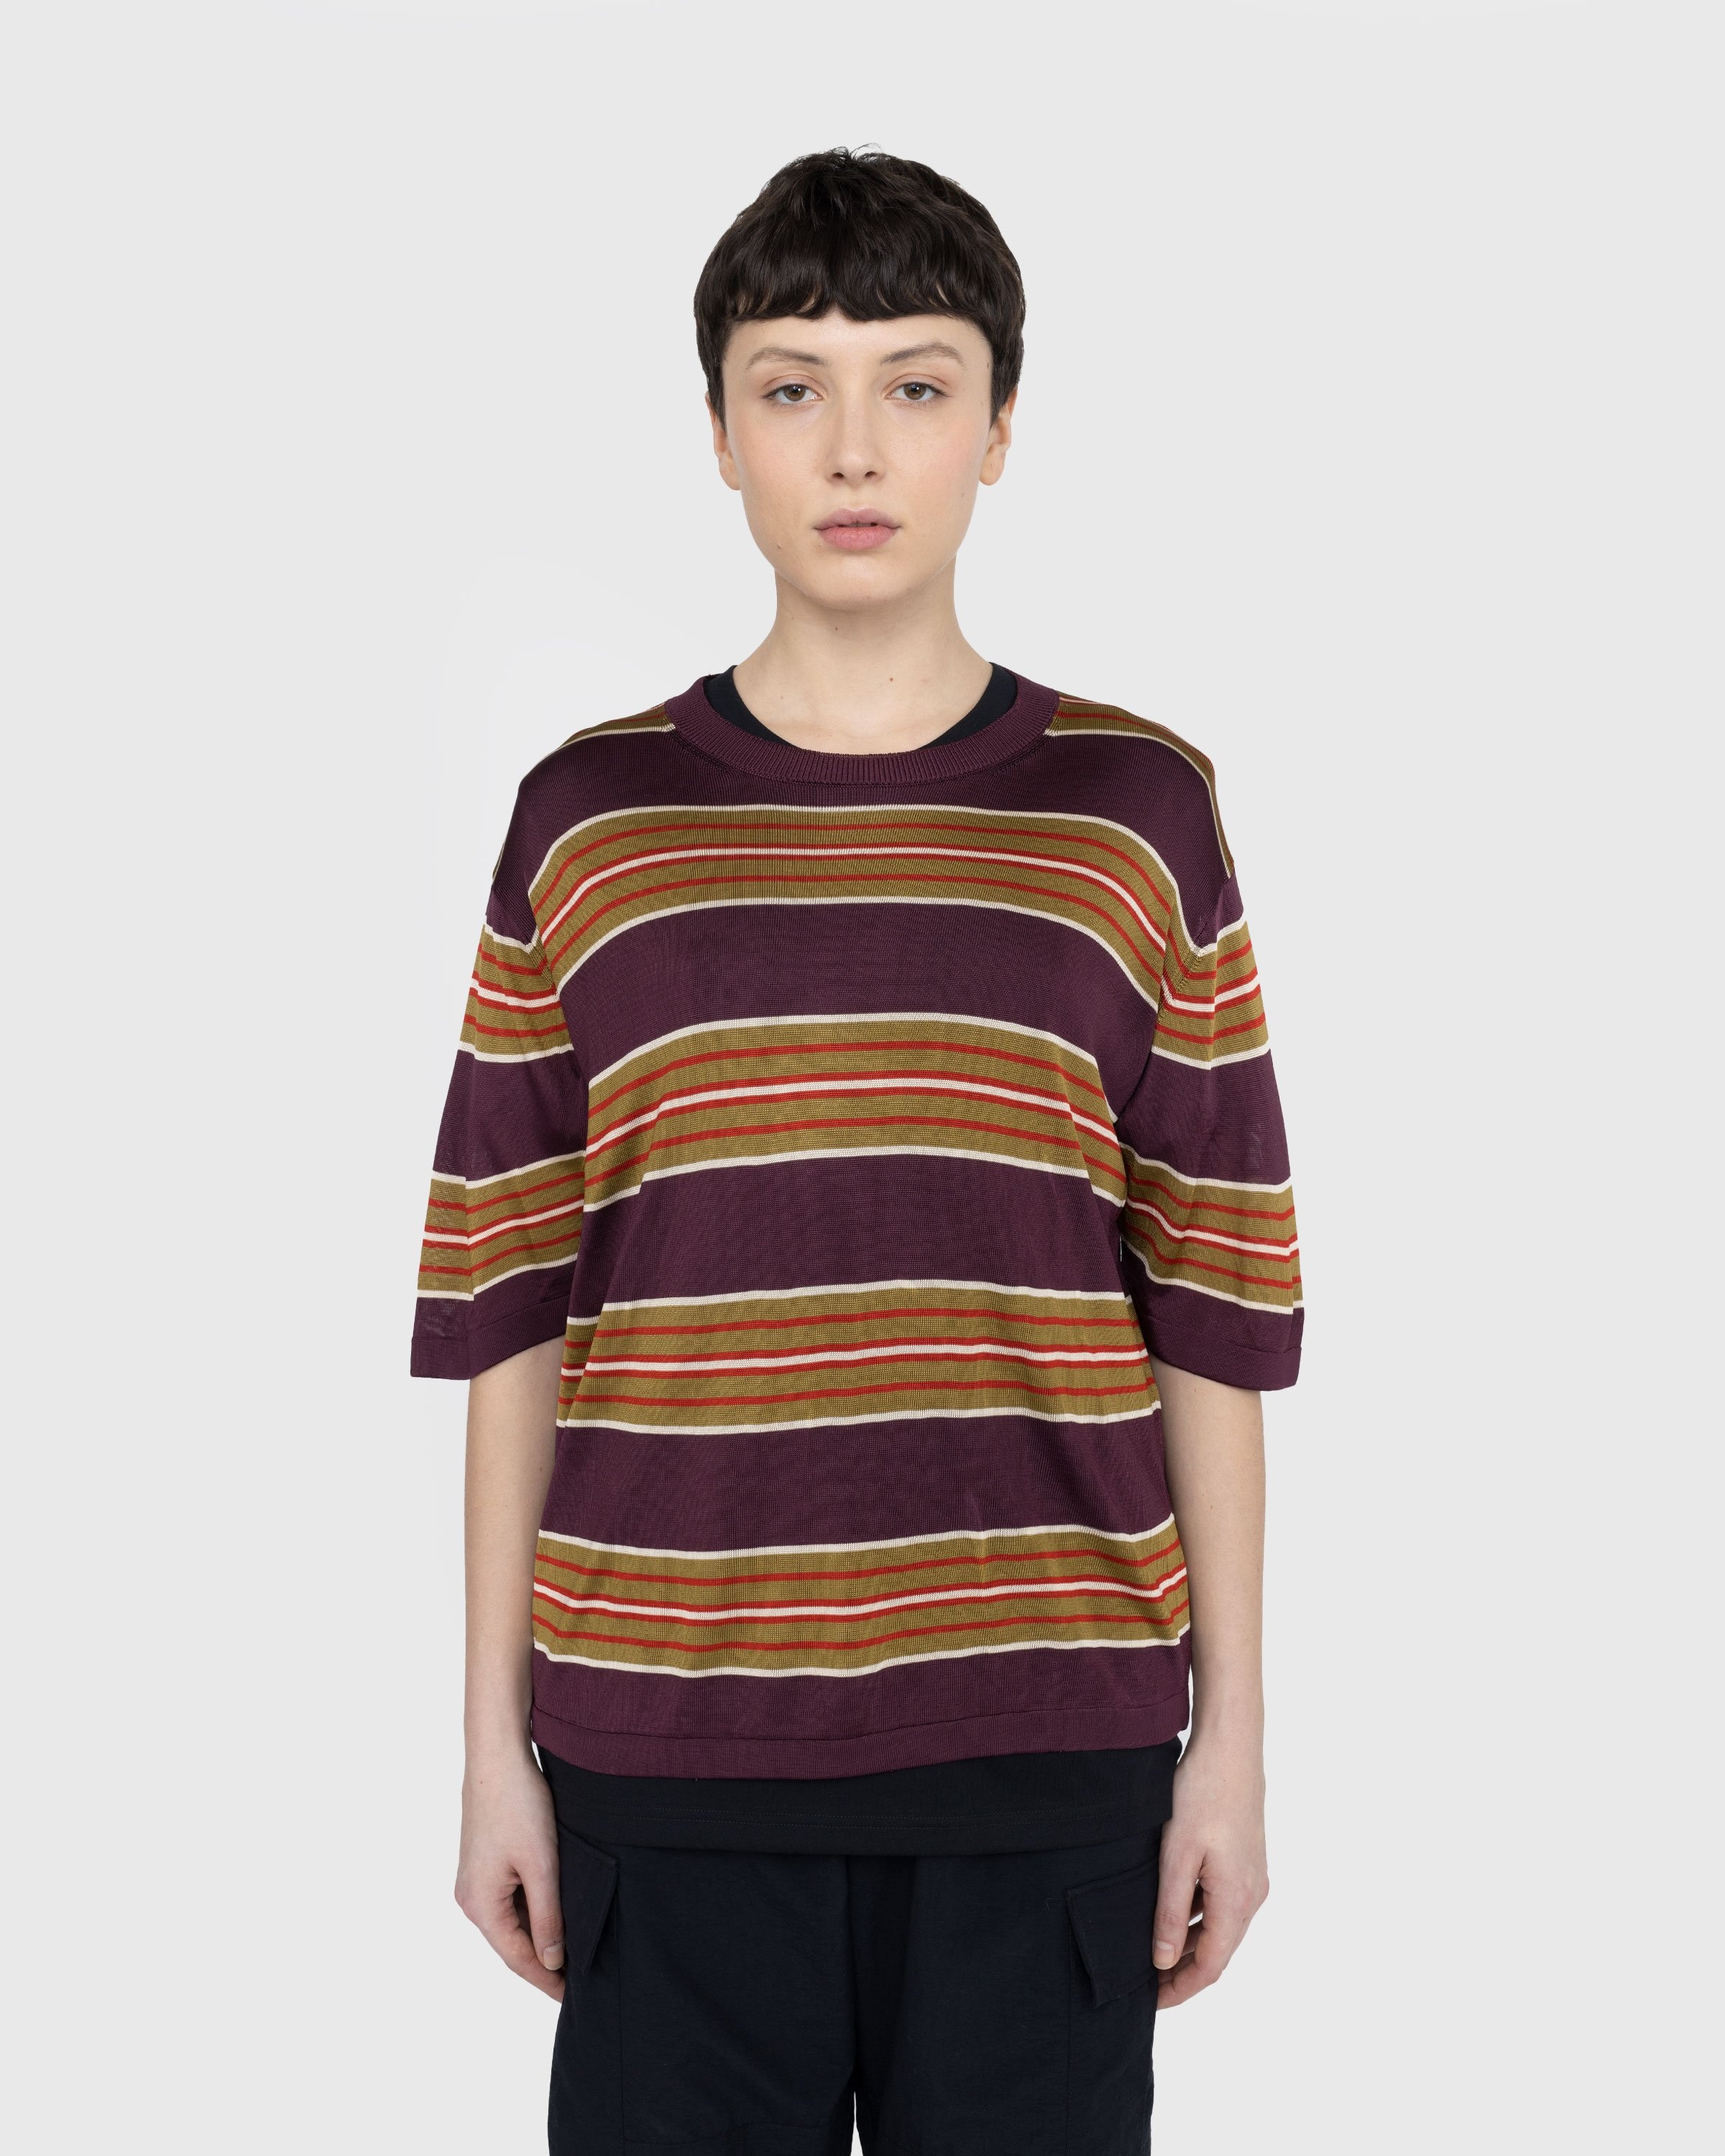 Dries van Noten – Mias Knit T-Shirt Burgundy - T-Shirts - Red - Image 3